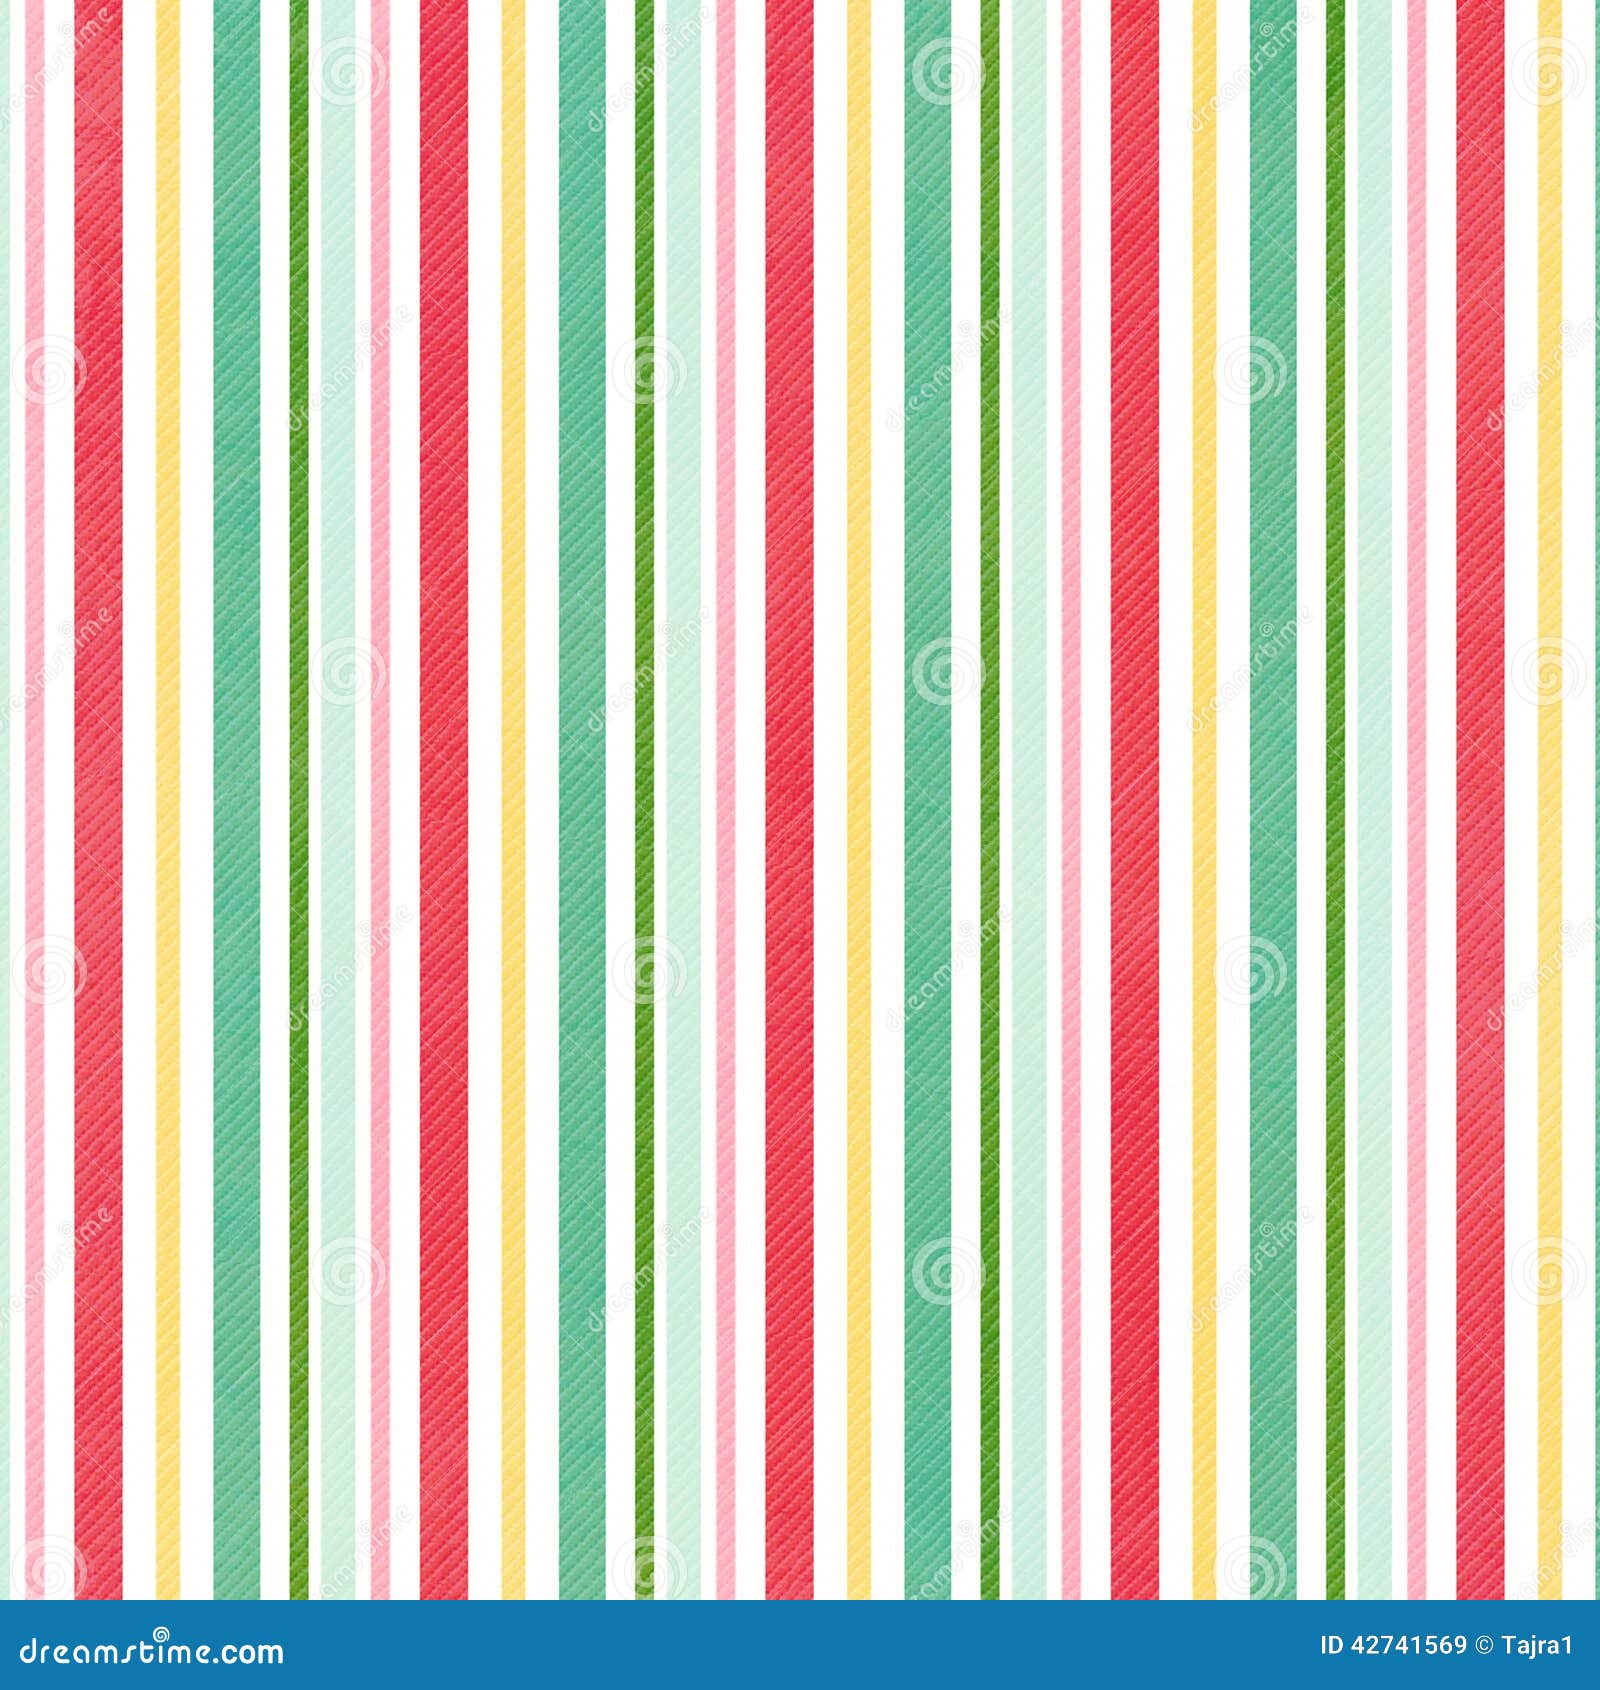 retro stripe pattern